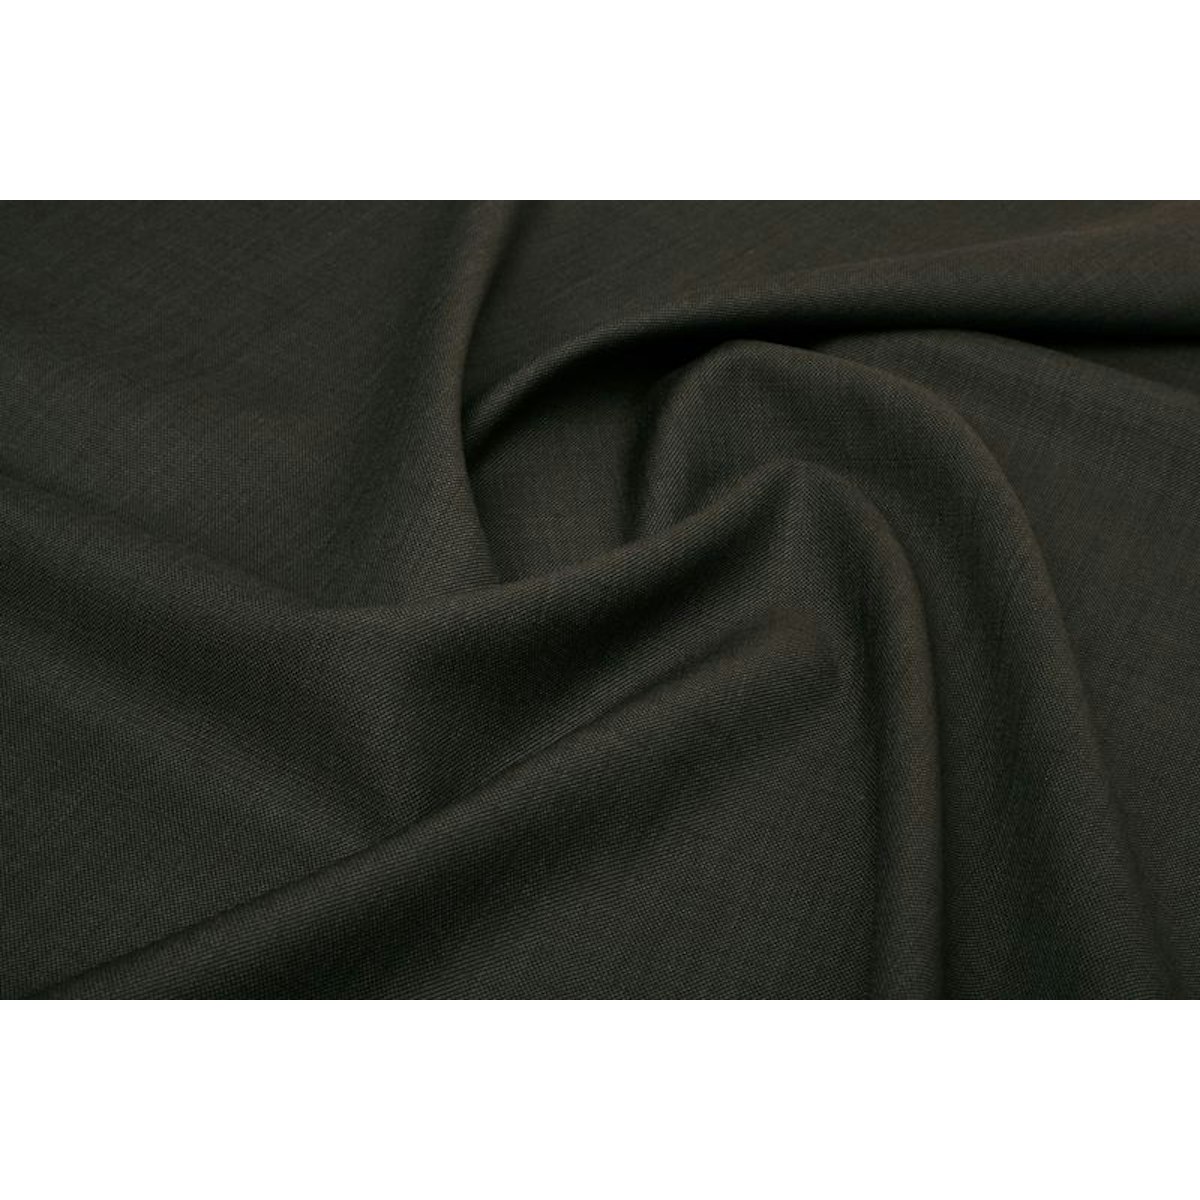 InStitchu Suit Fabric 52